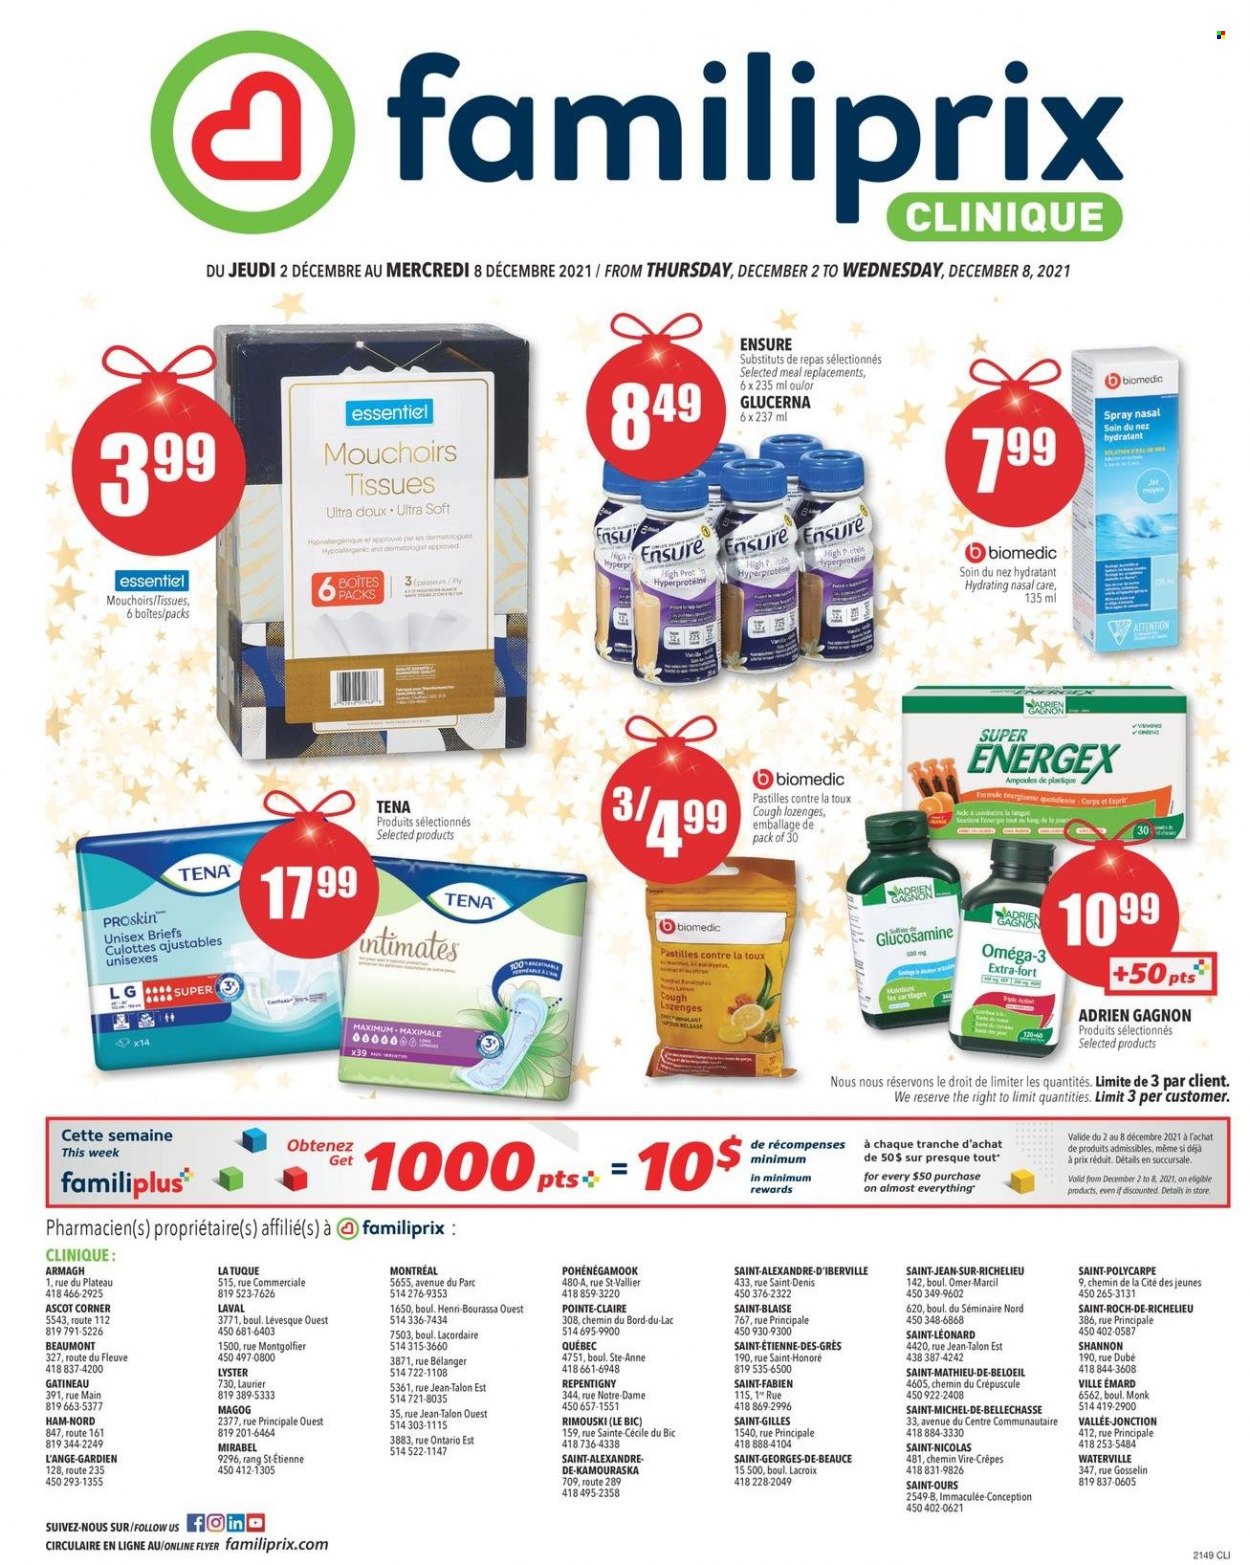 thumbnail - Familiprix Clinique Flyer - December 02, 2021 - December 08, 2021 - Sales products - pastilles, tissues, Clinique, BIC, glucosamine, Omega-3, Glucerna. Page 1.